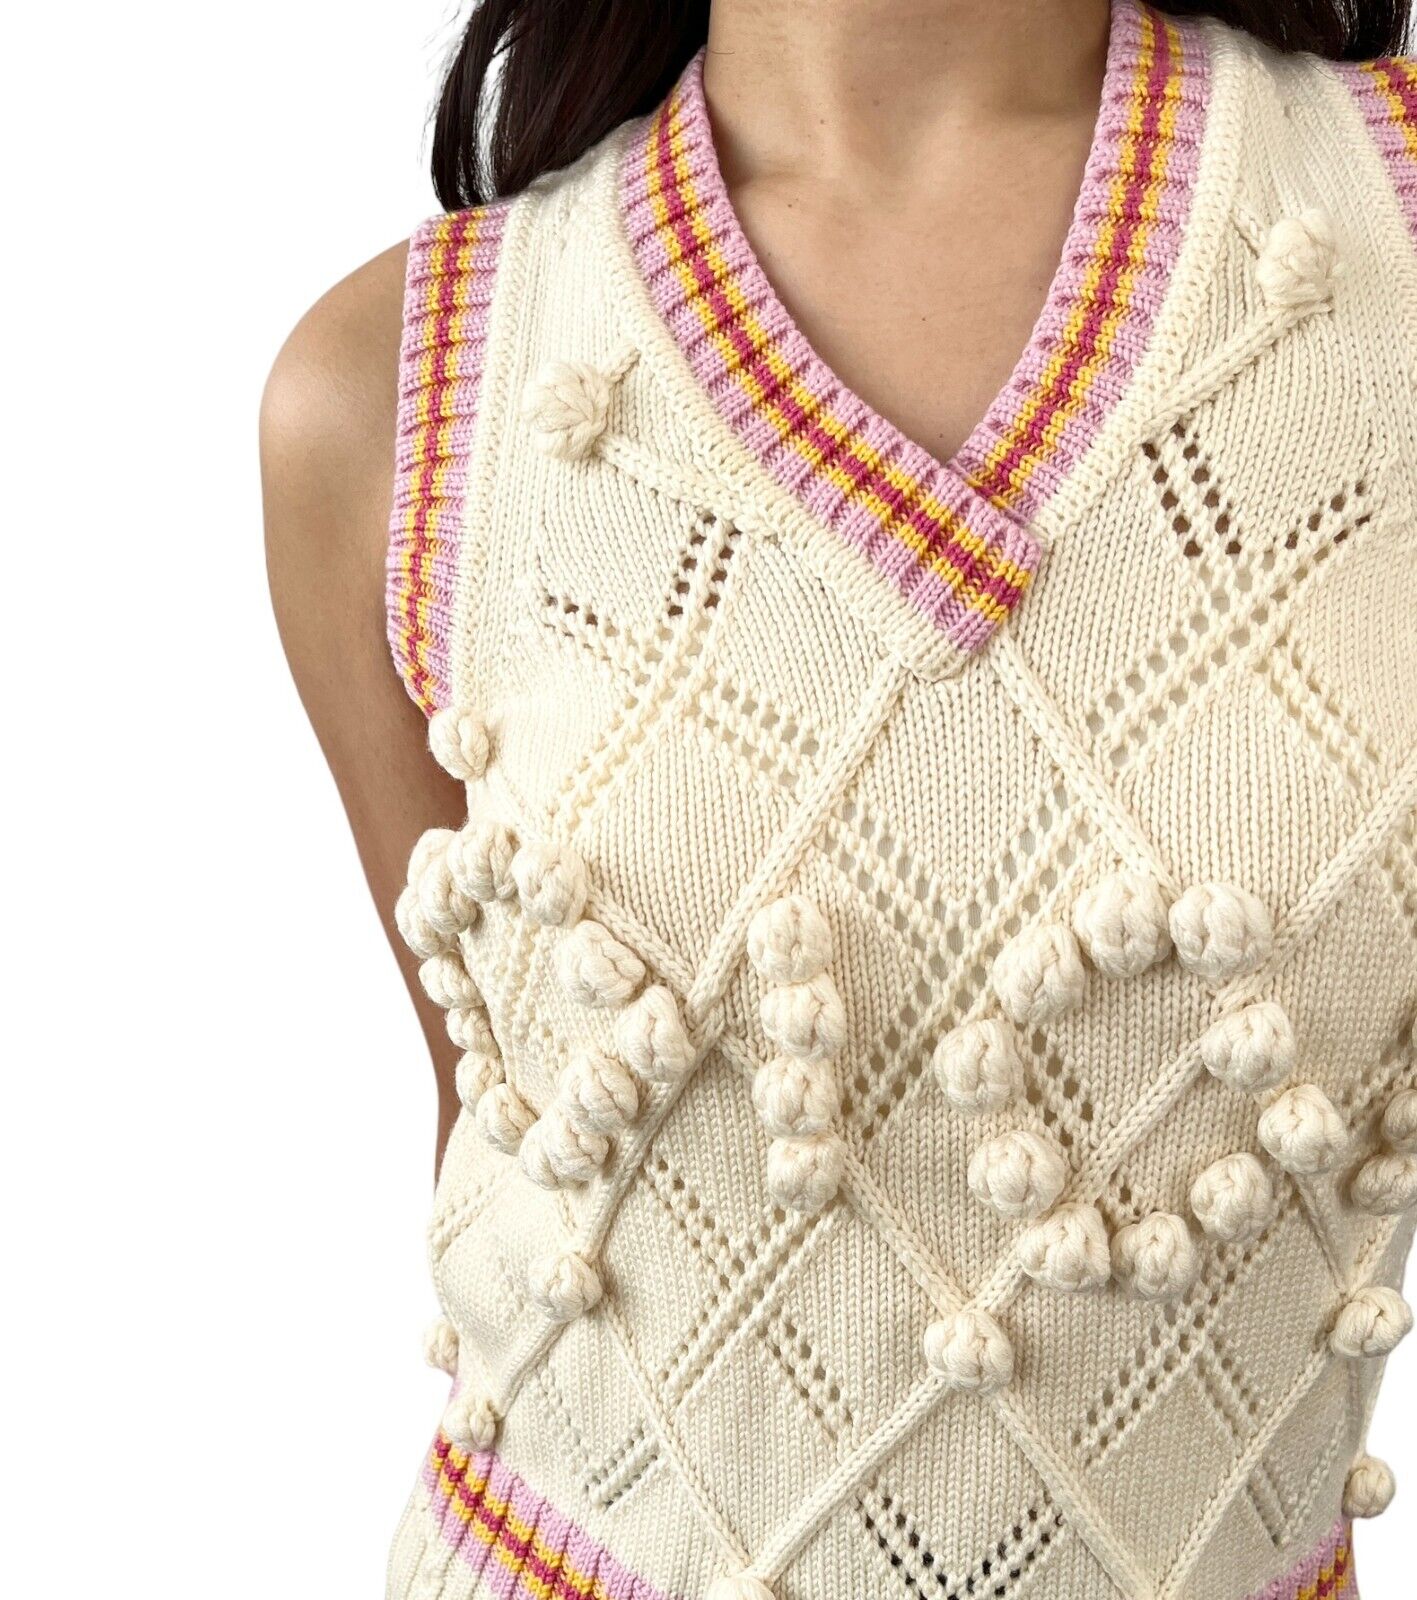 Christian Dior Vintage Logo Pom Pom Knit Vest #36 Cream Wool Tank Top RankAB